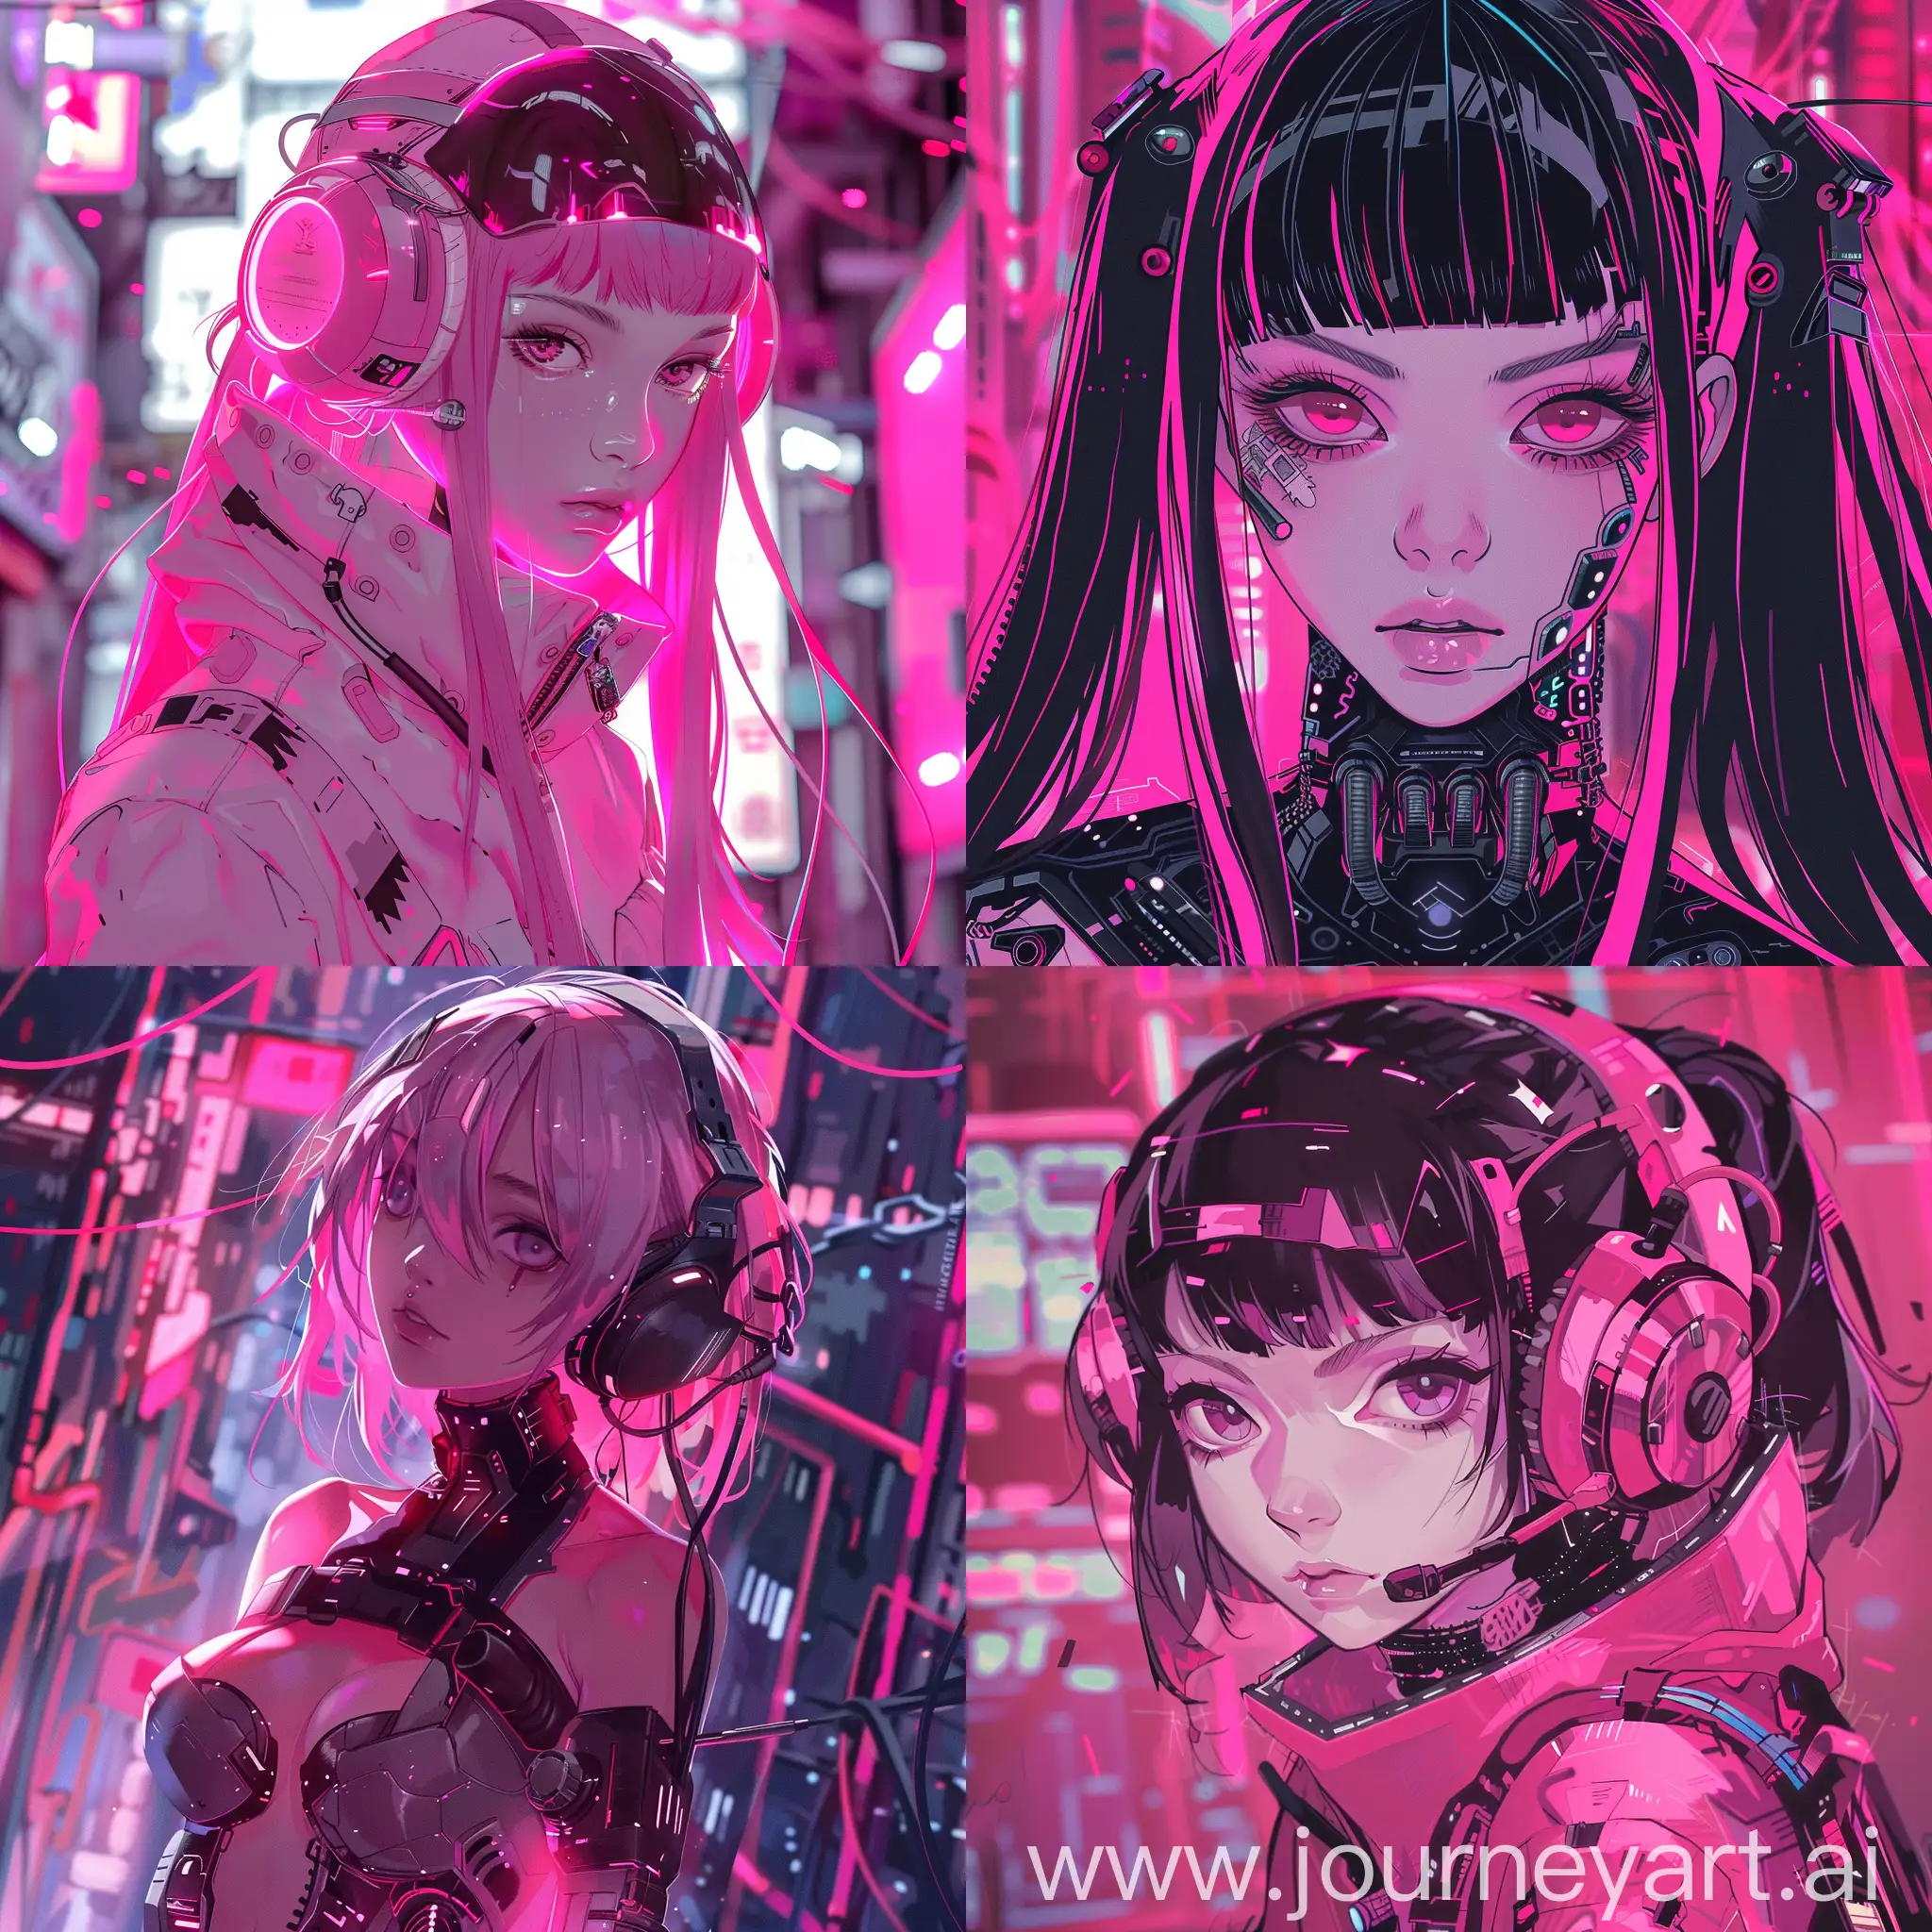 аниме девочка кибер эстетика в розовых тонах hd качество мультики киберпанк